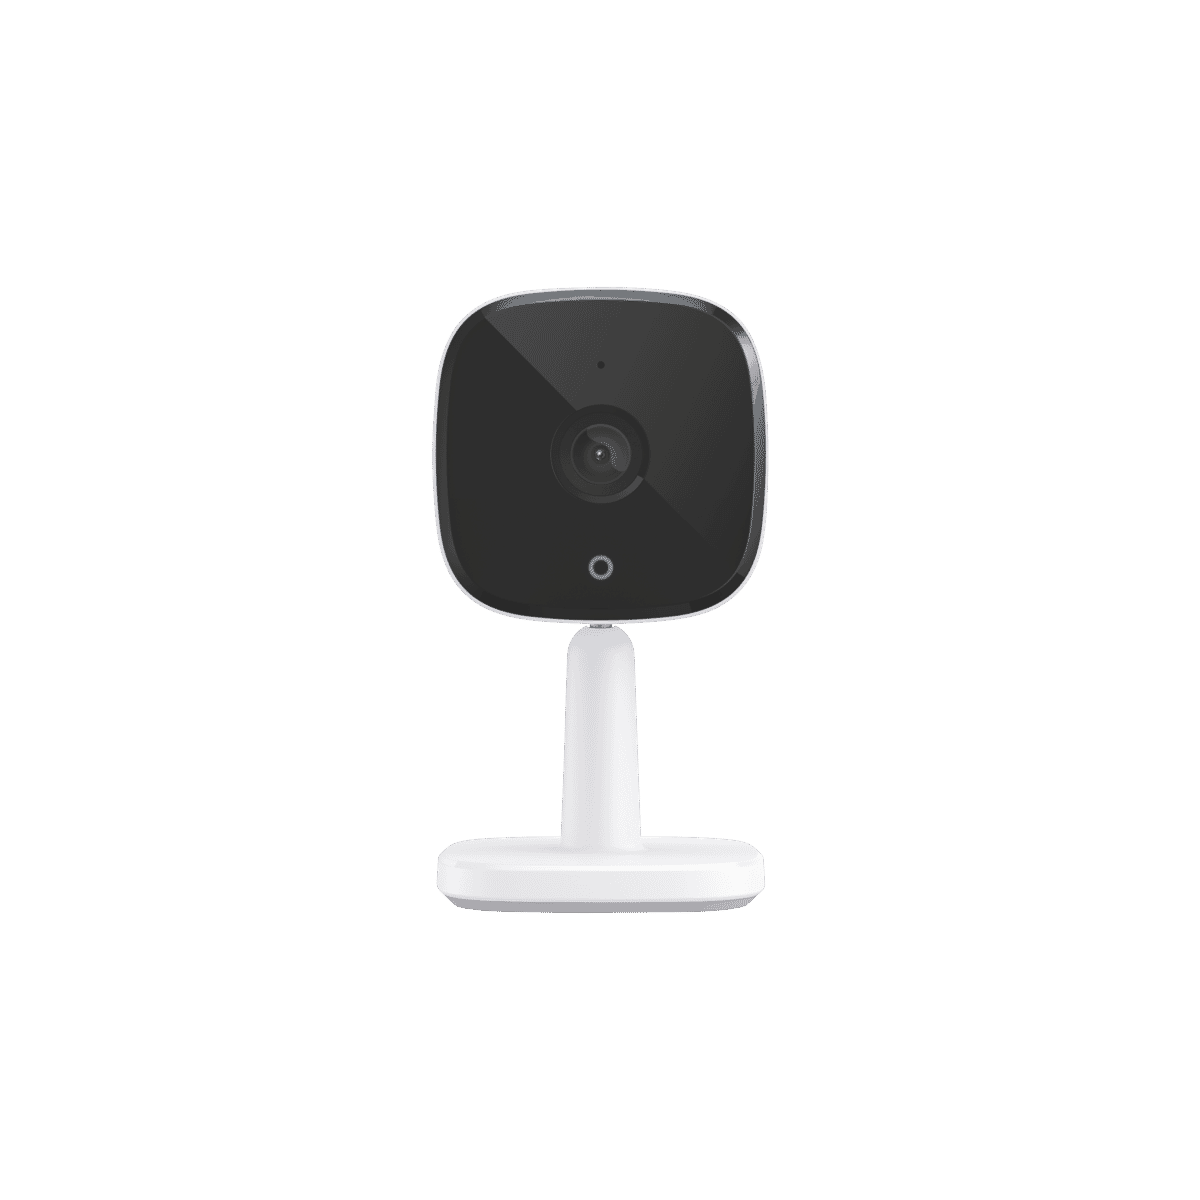 eufy 2K Indoor Security Camera T8400CW4